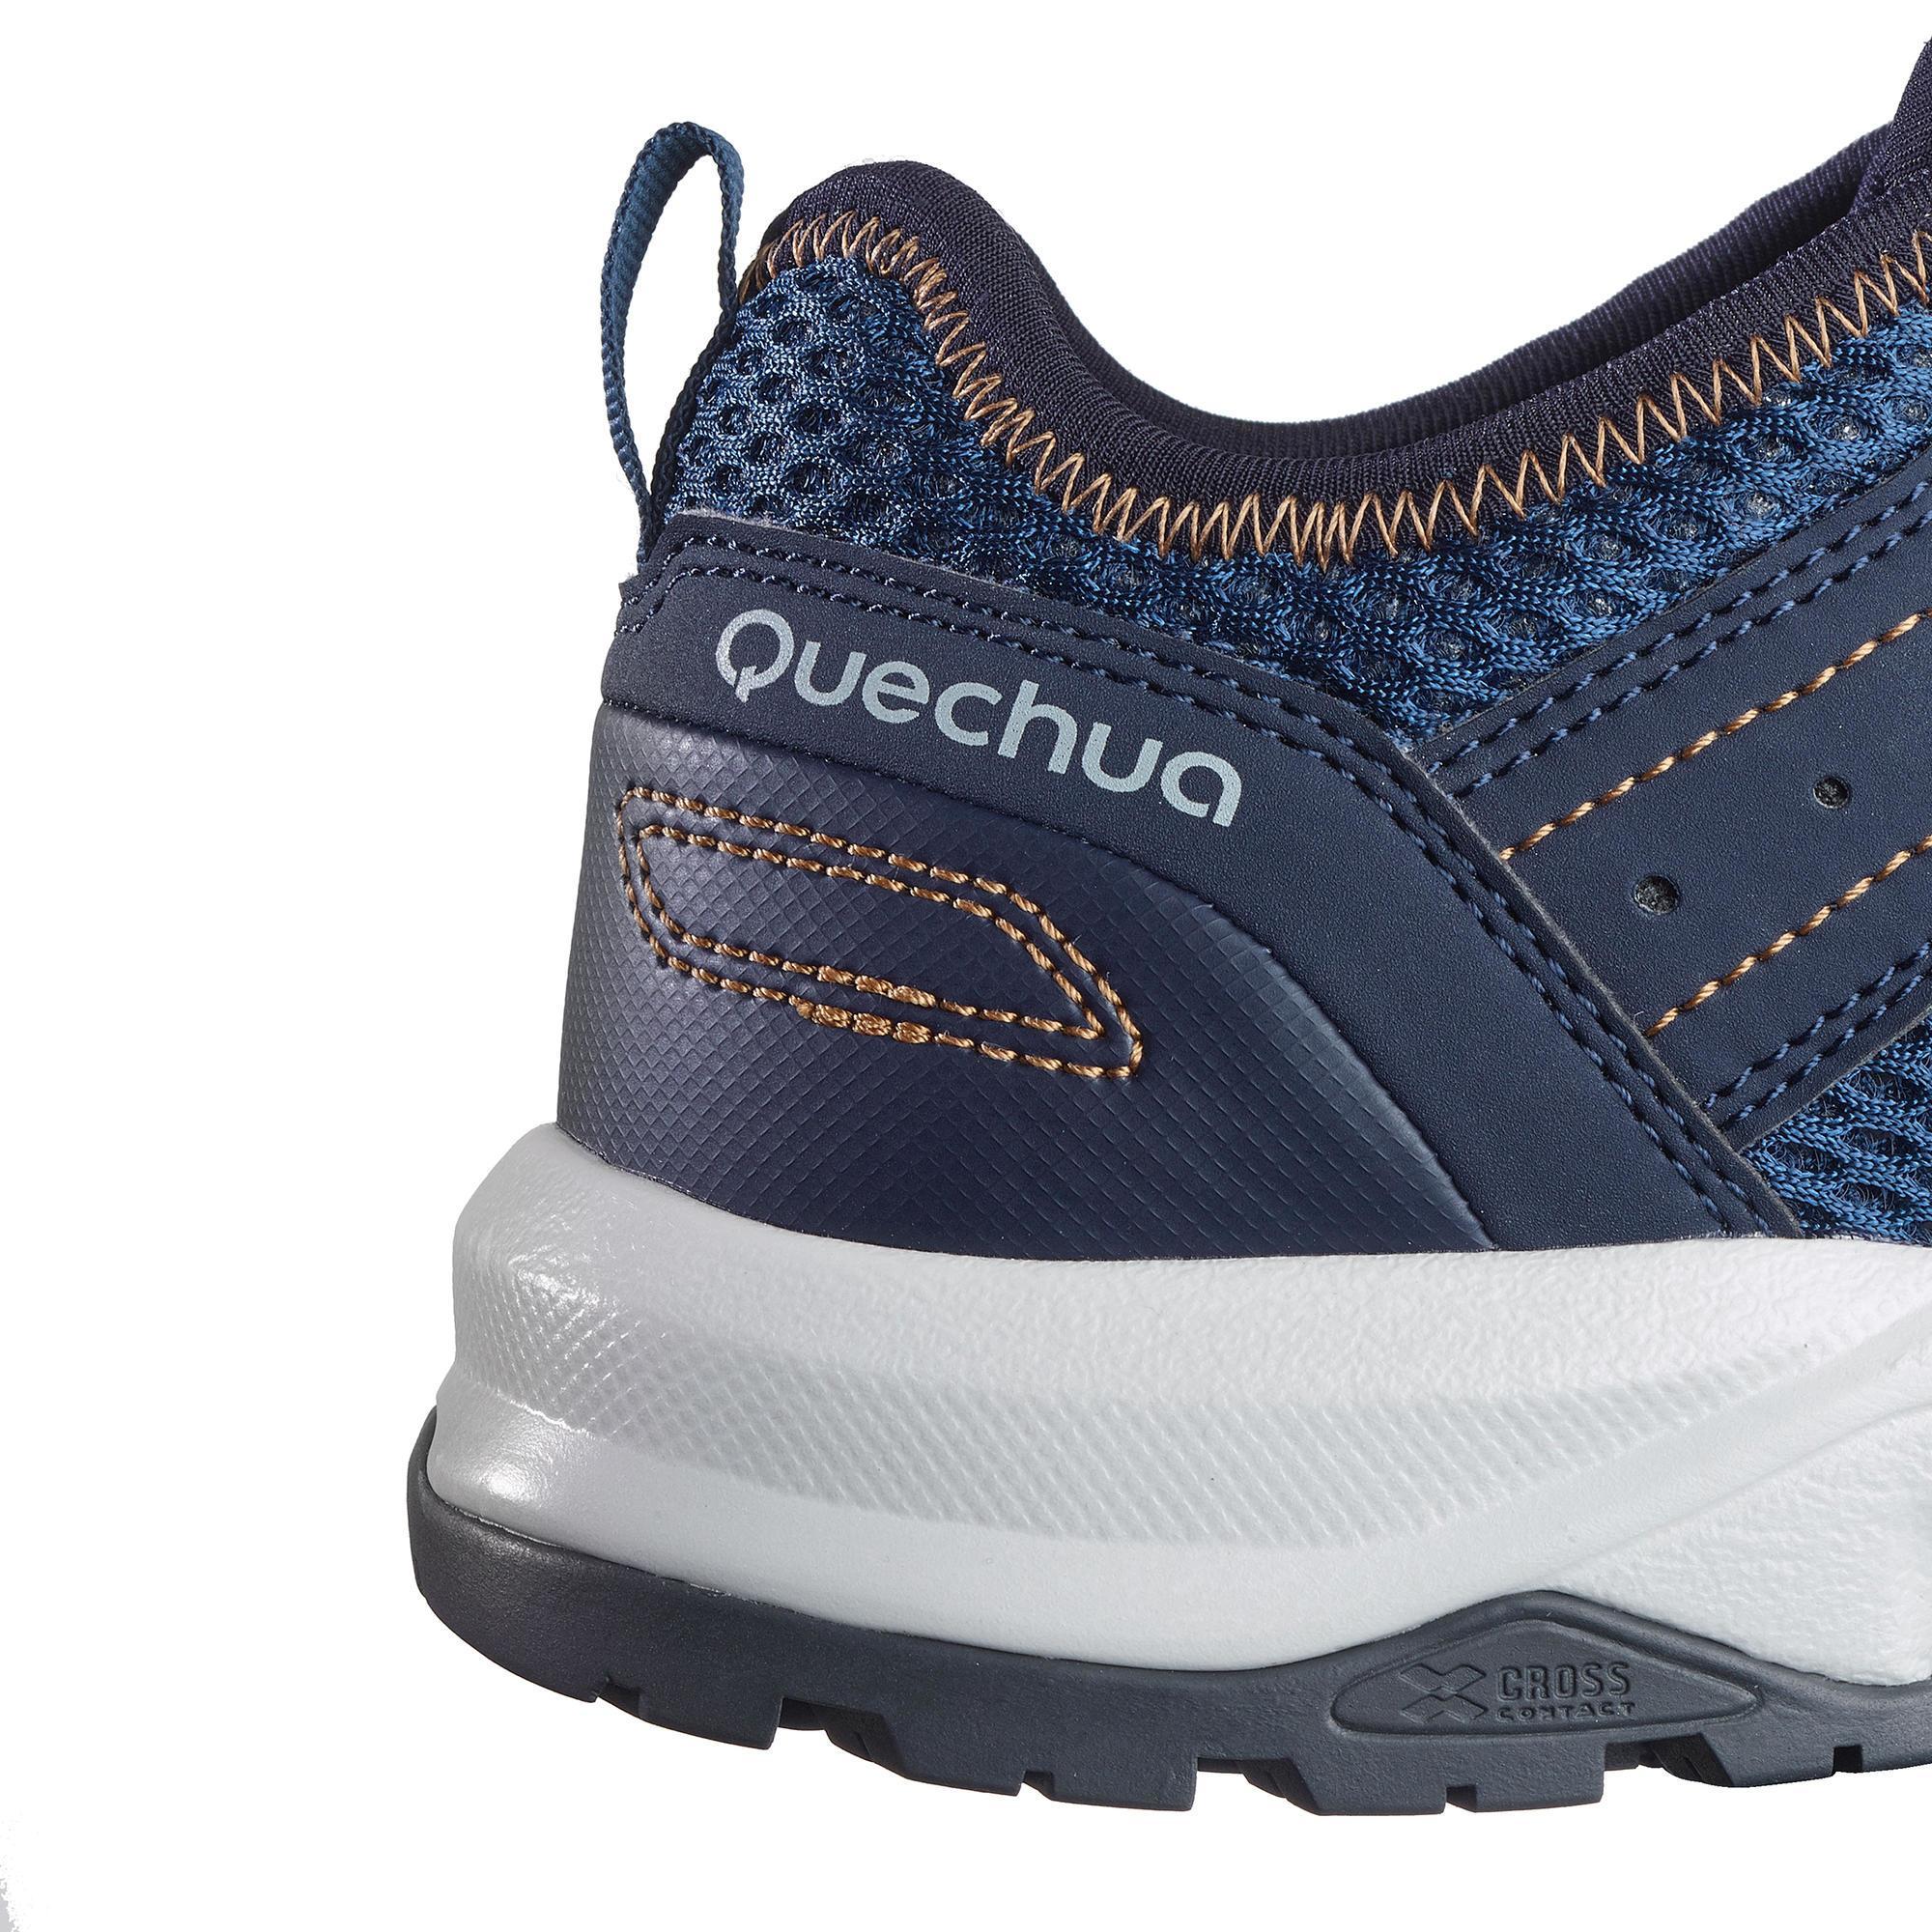 decathlon scarpe uomo quechua